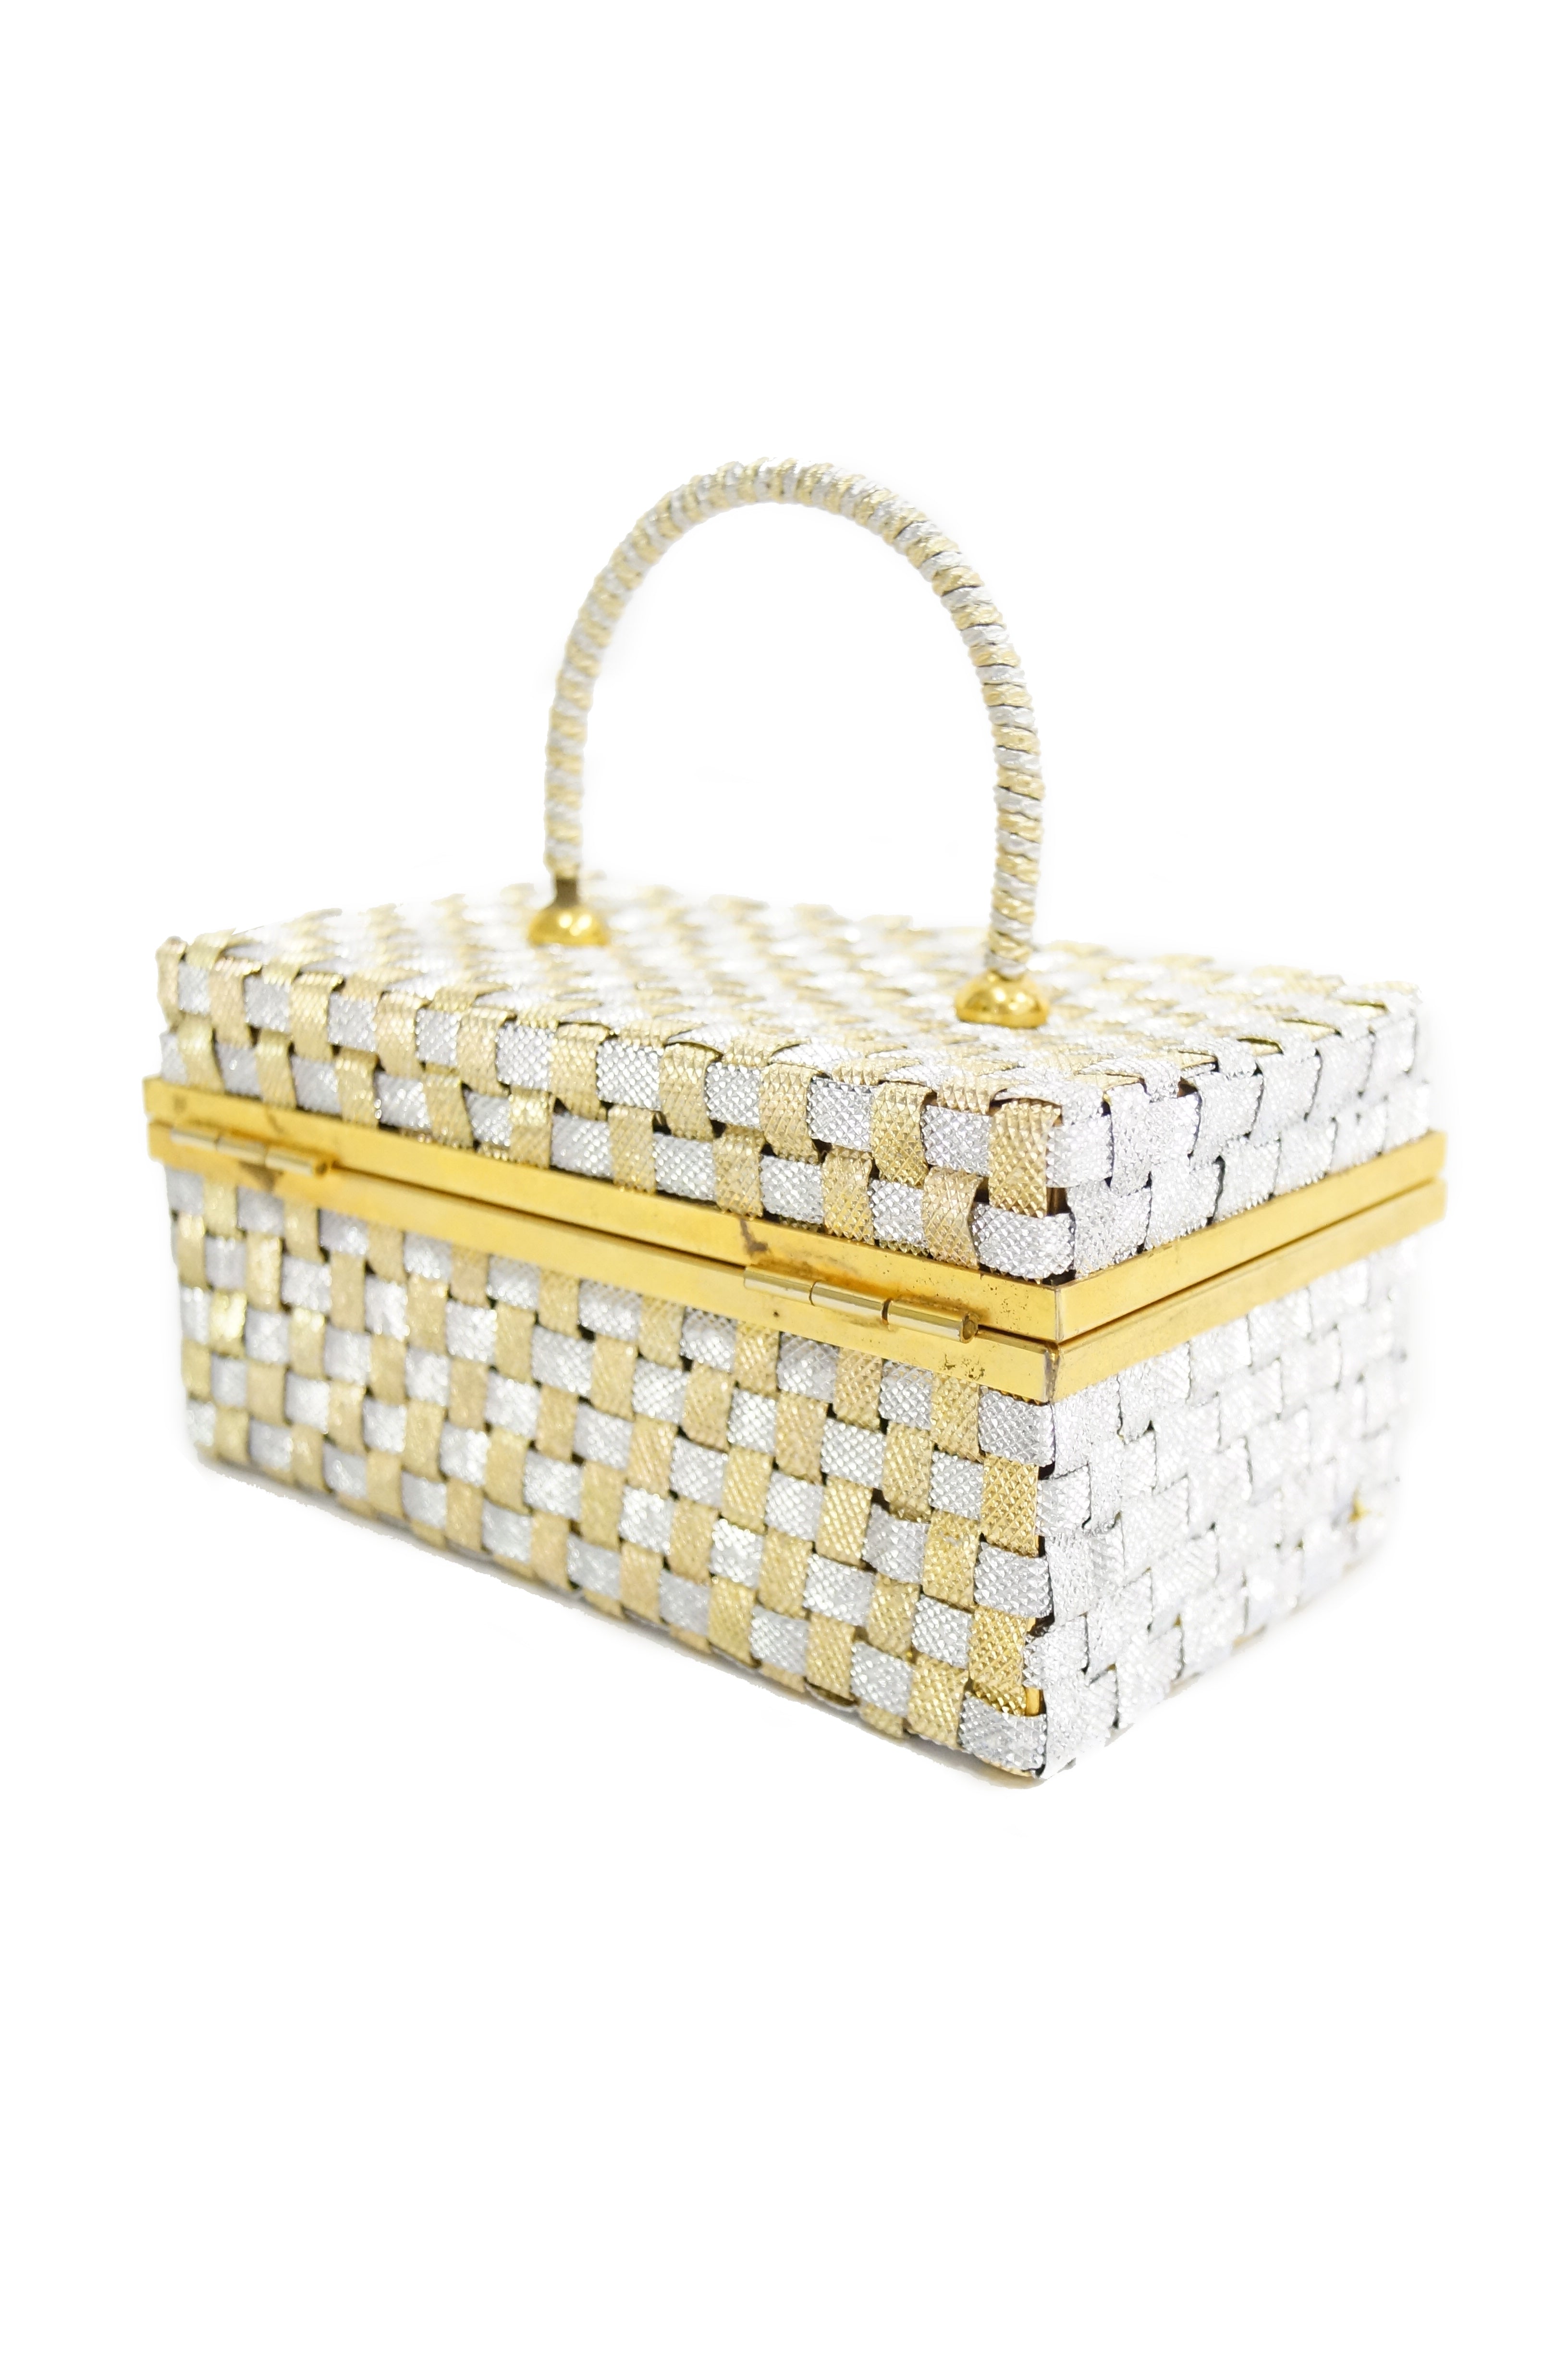 Copperton Lane: DeLill Gold Beaded Handbag Purse Mother of Pearl